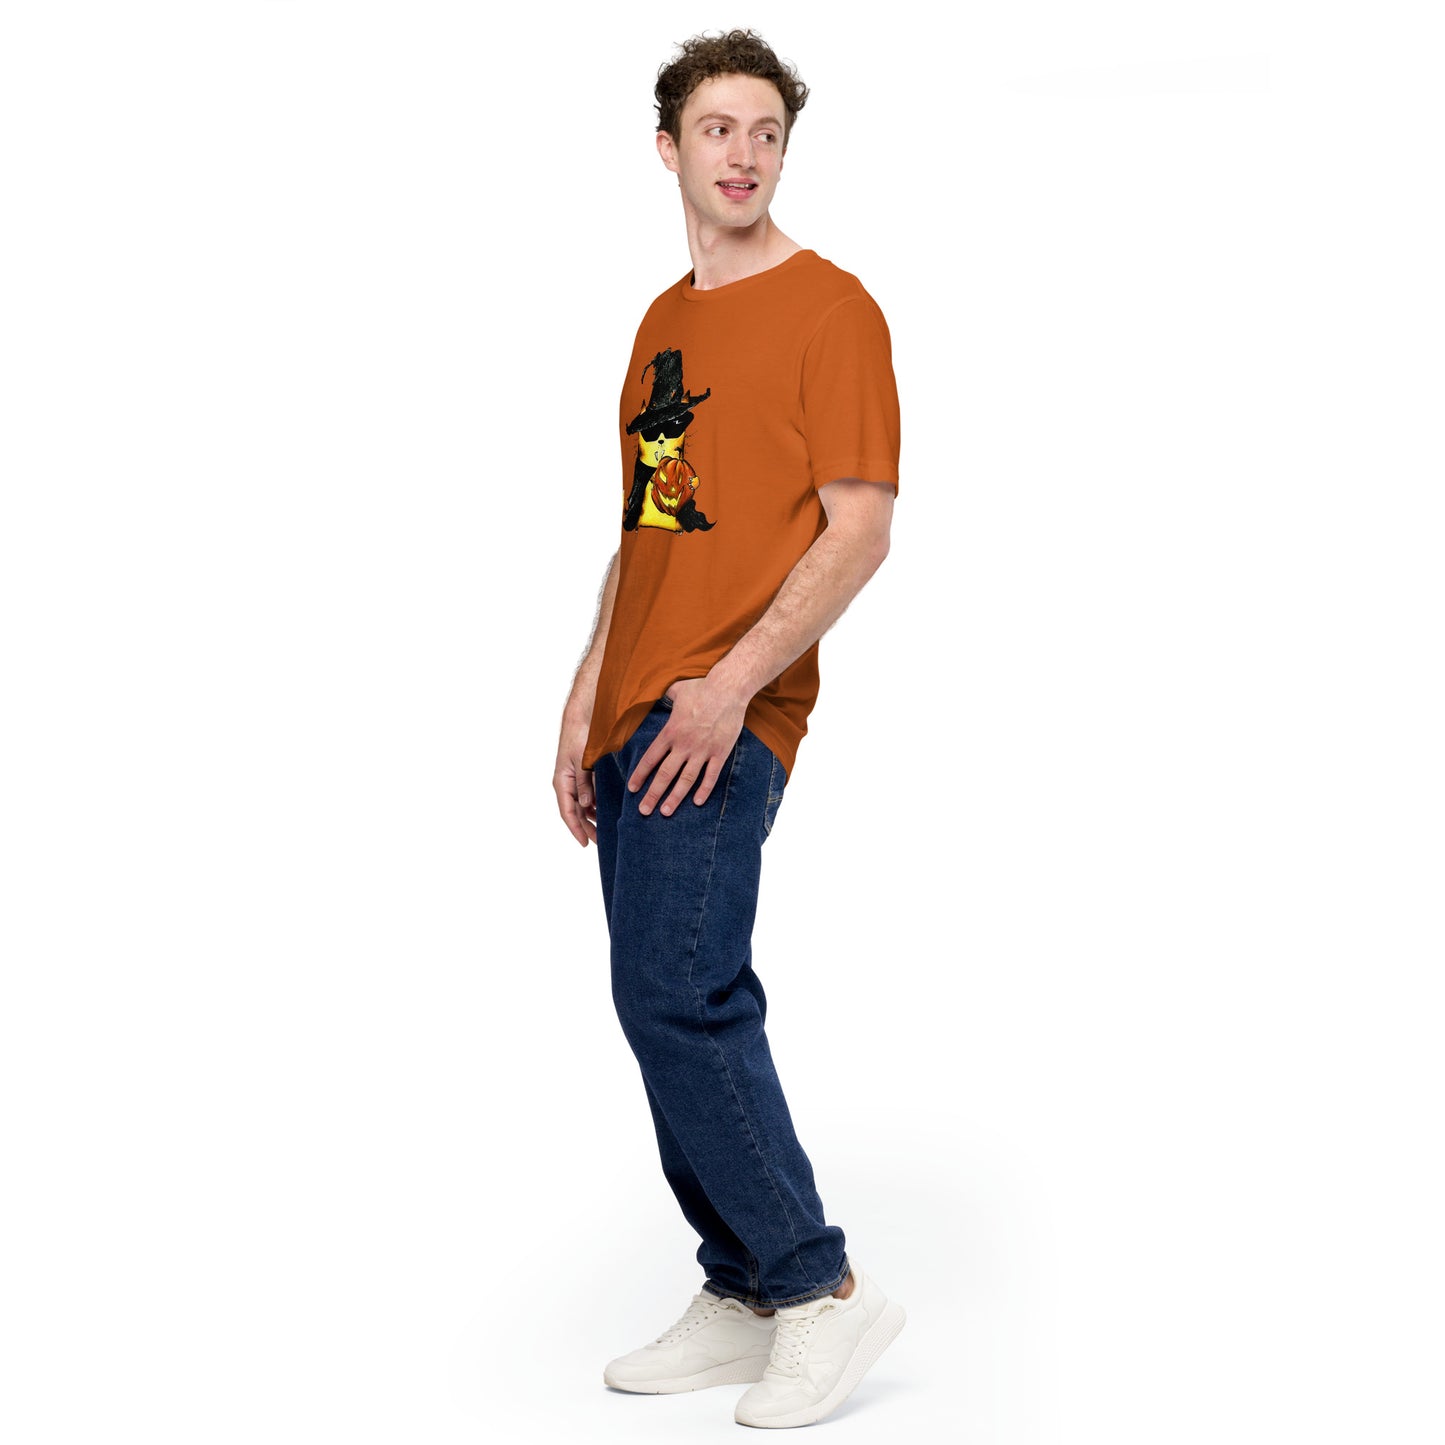 Men's T-shirt "Cat and Pumpkin"